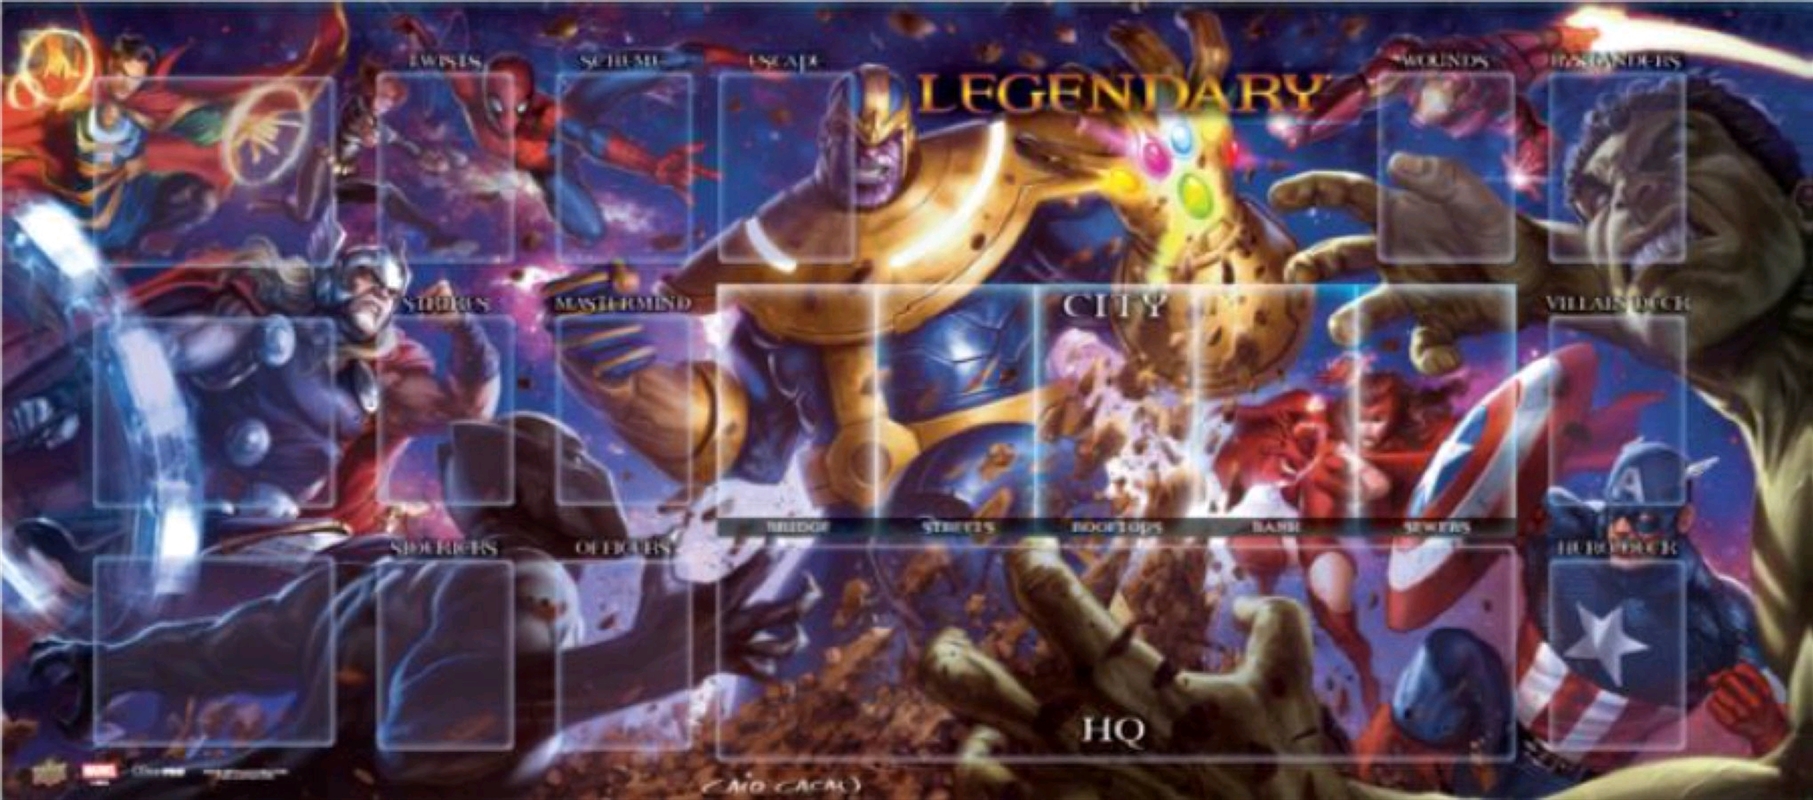 Marvel Legendary - Thanos vs Avengers Playmat/Product Detail/Card Games